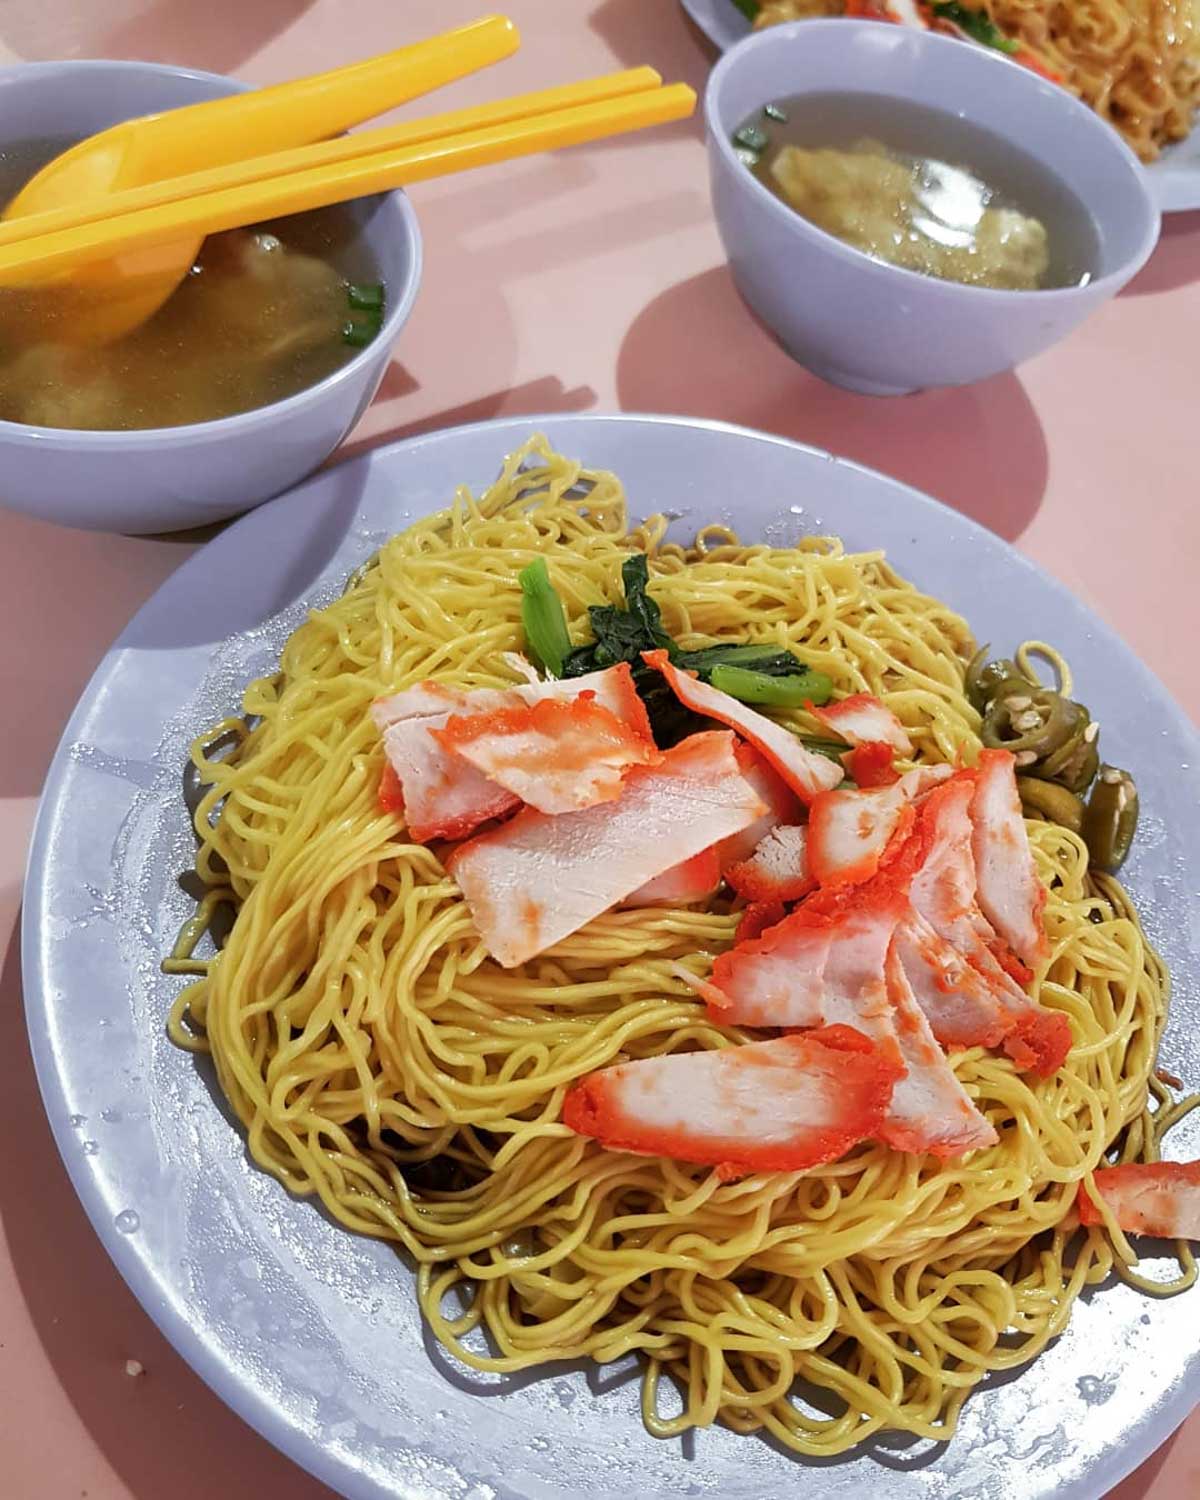 Jurong West 505 - Long Kee Wanton Noodles